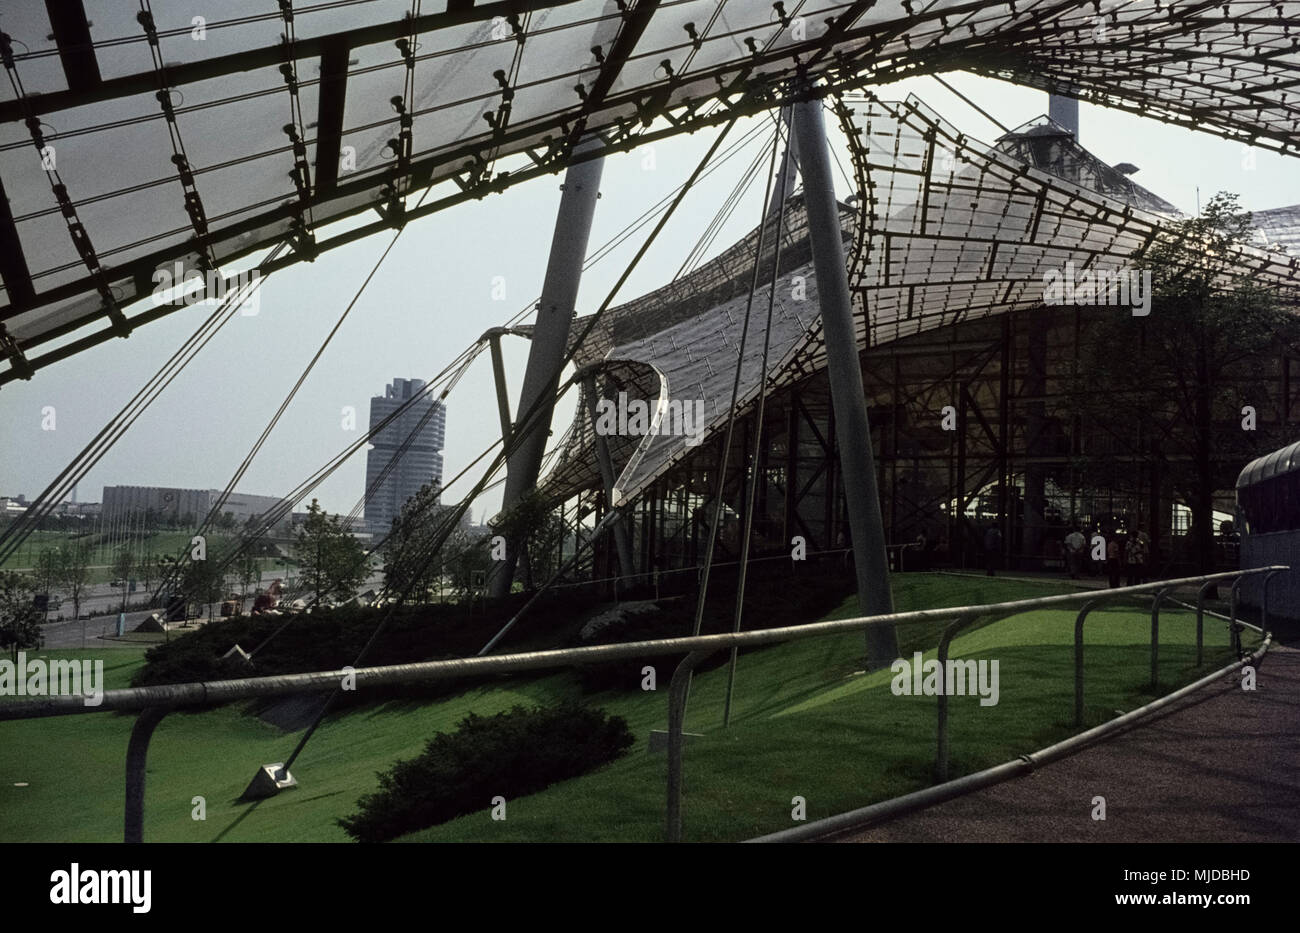 Der Münchner Olympiapark kurz vor der Fertigstellung. The Olympic Park of Munich under construction. The Olympiapark just before completion in 1972. Stock Photo